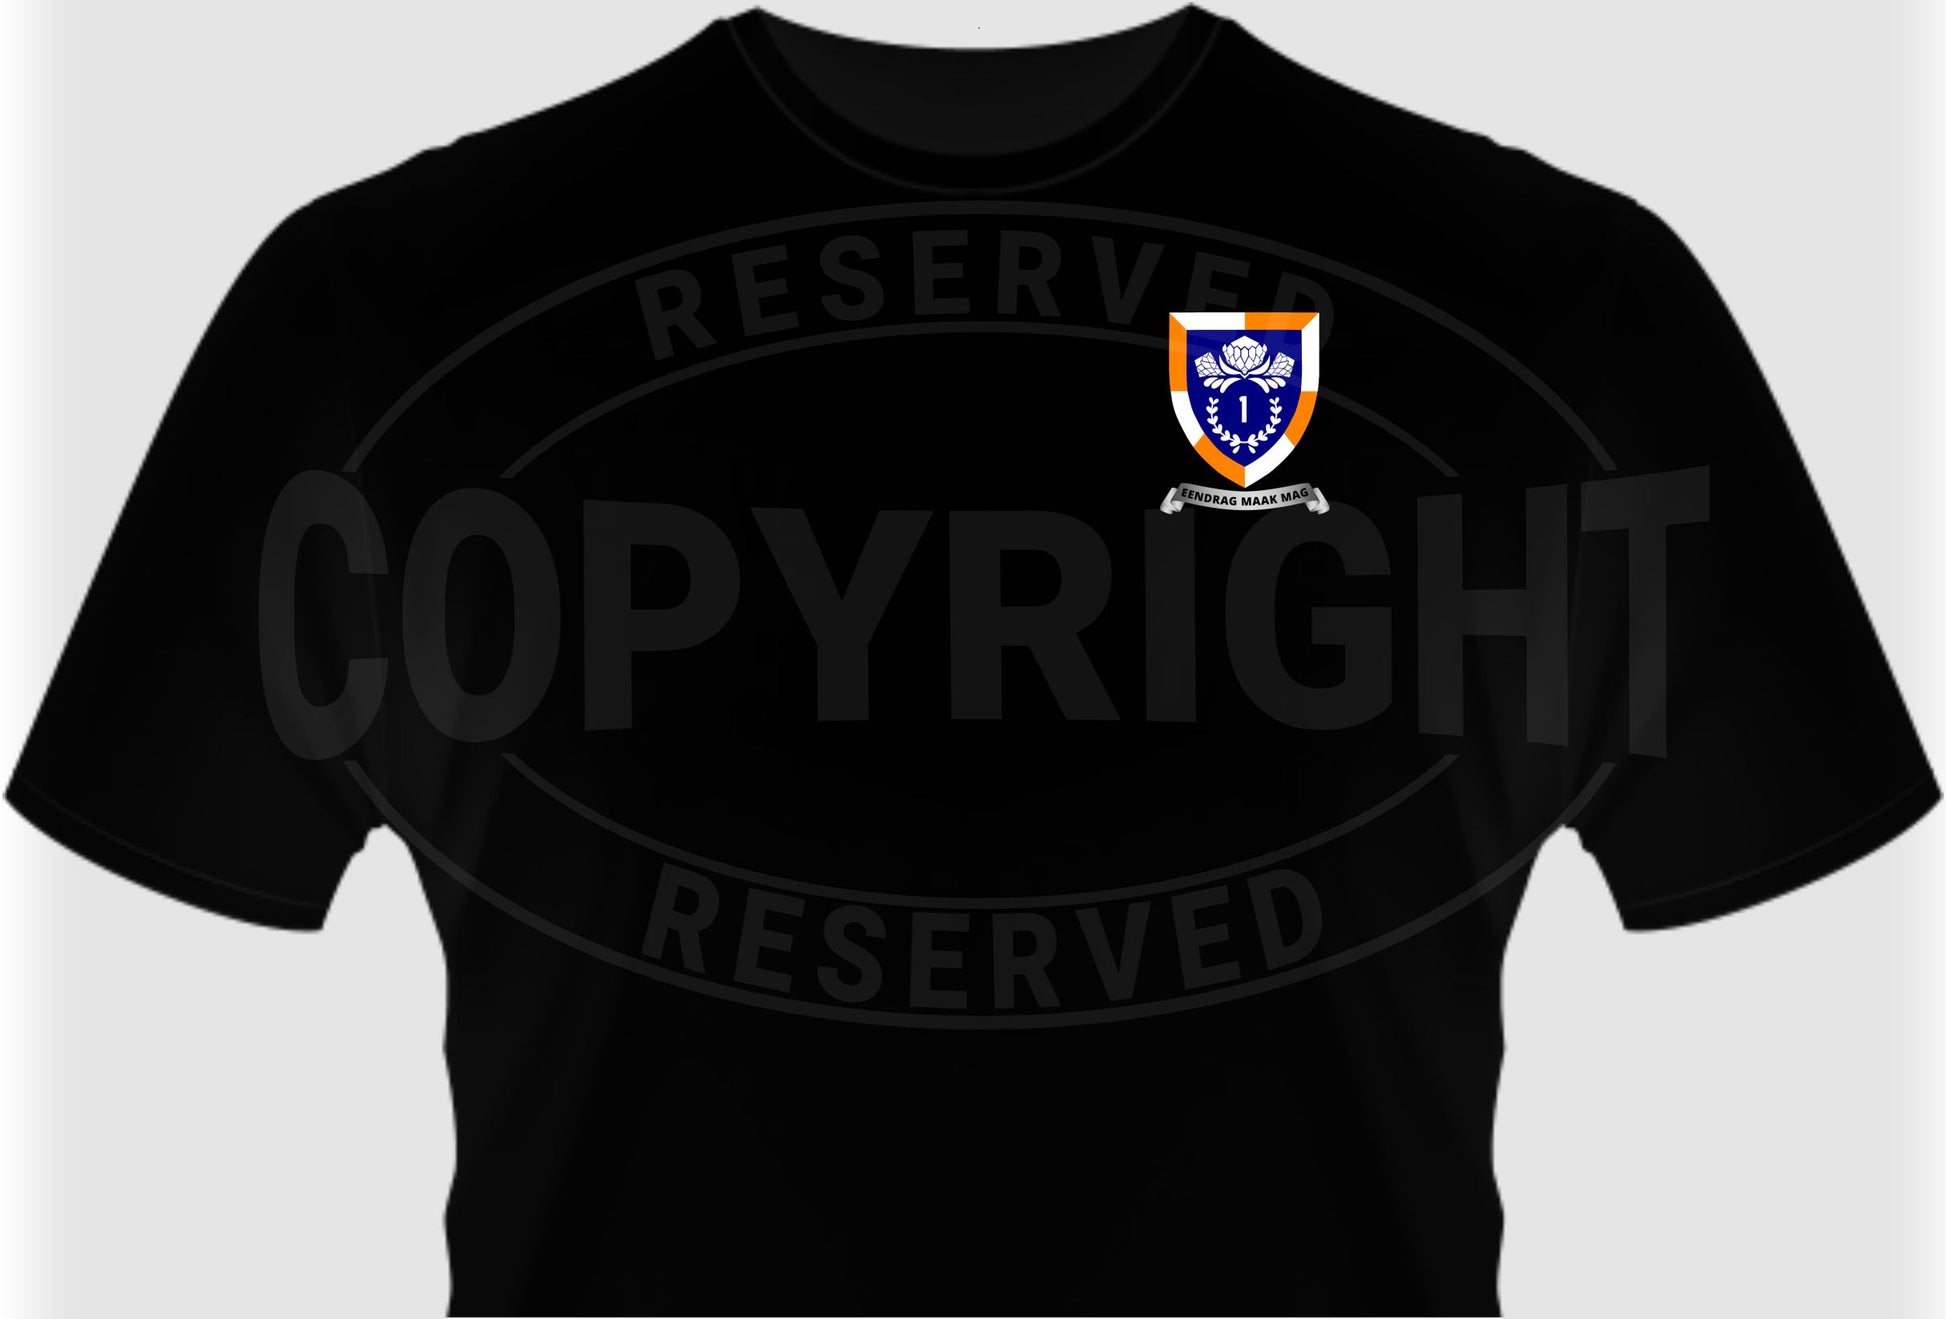 1 SSB T-Shirt: ITEE-37 - Bokkop